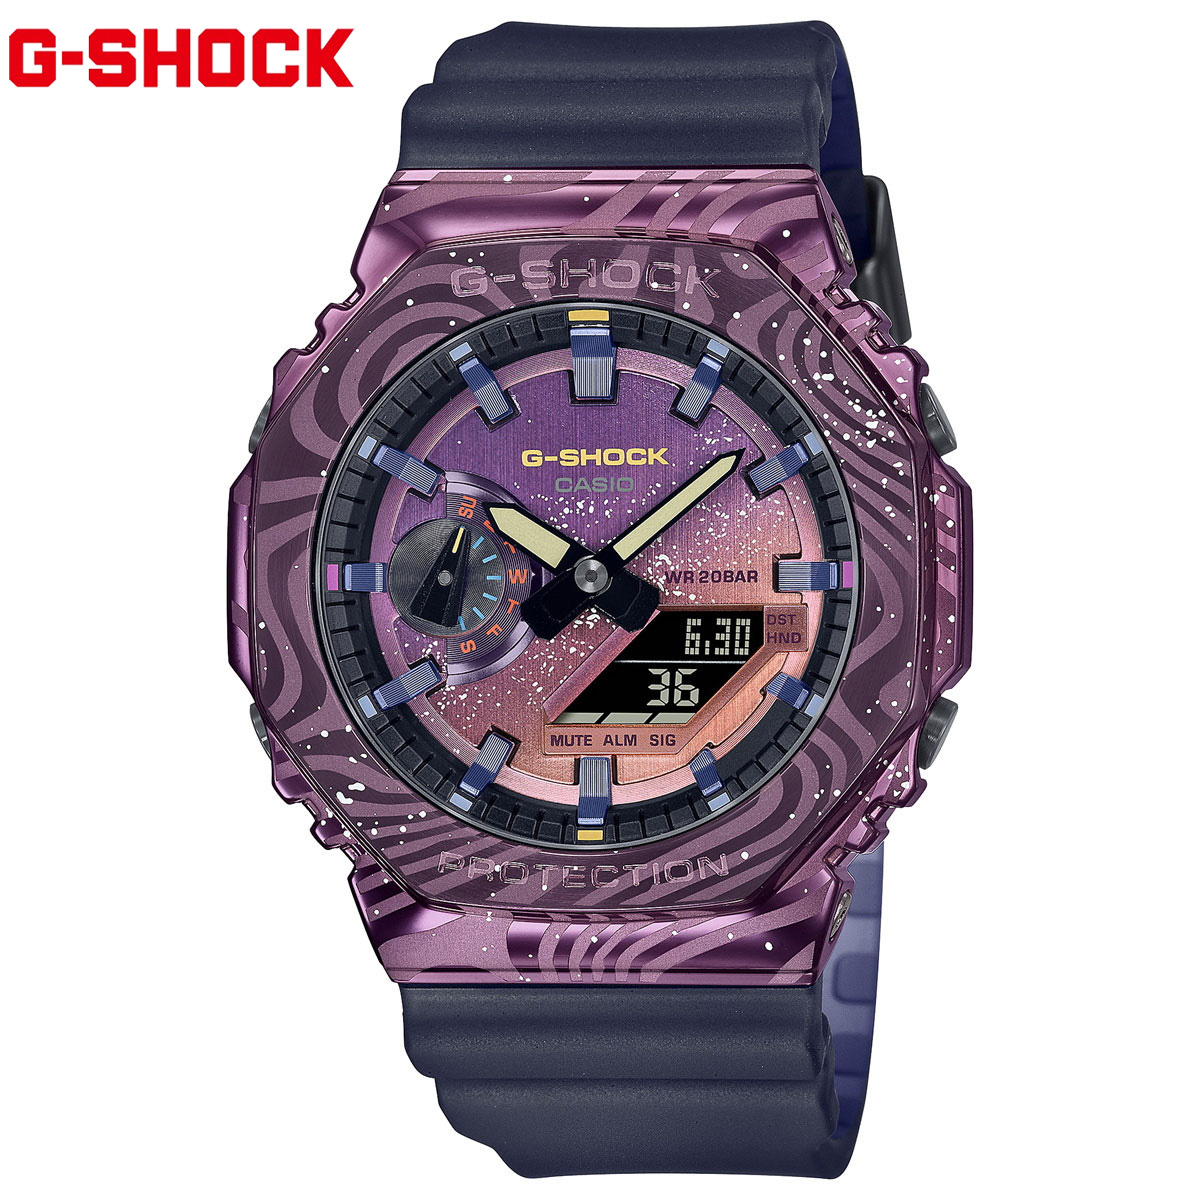 Gショック G-SHOCK 腕時計 メンズ GM-2100MWG-1AJR メタルカバー 銀河系モチーフ ジーショック